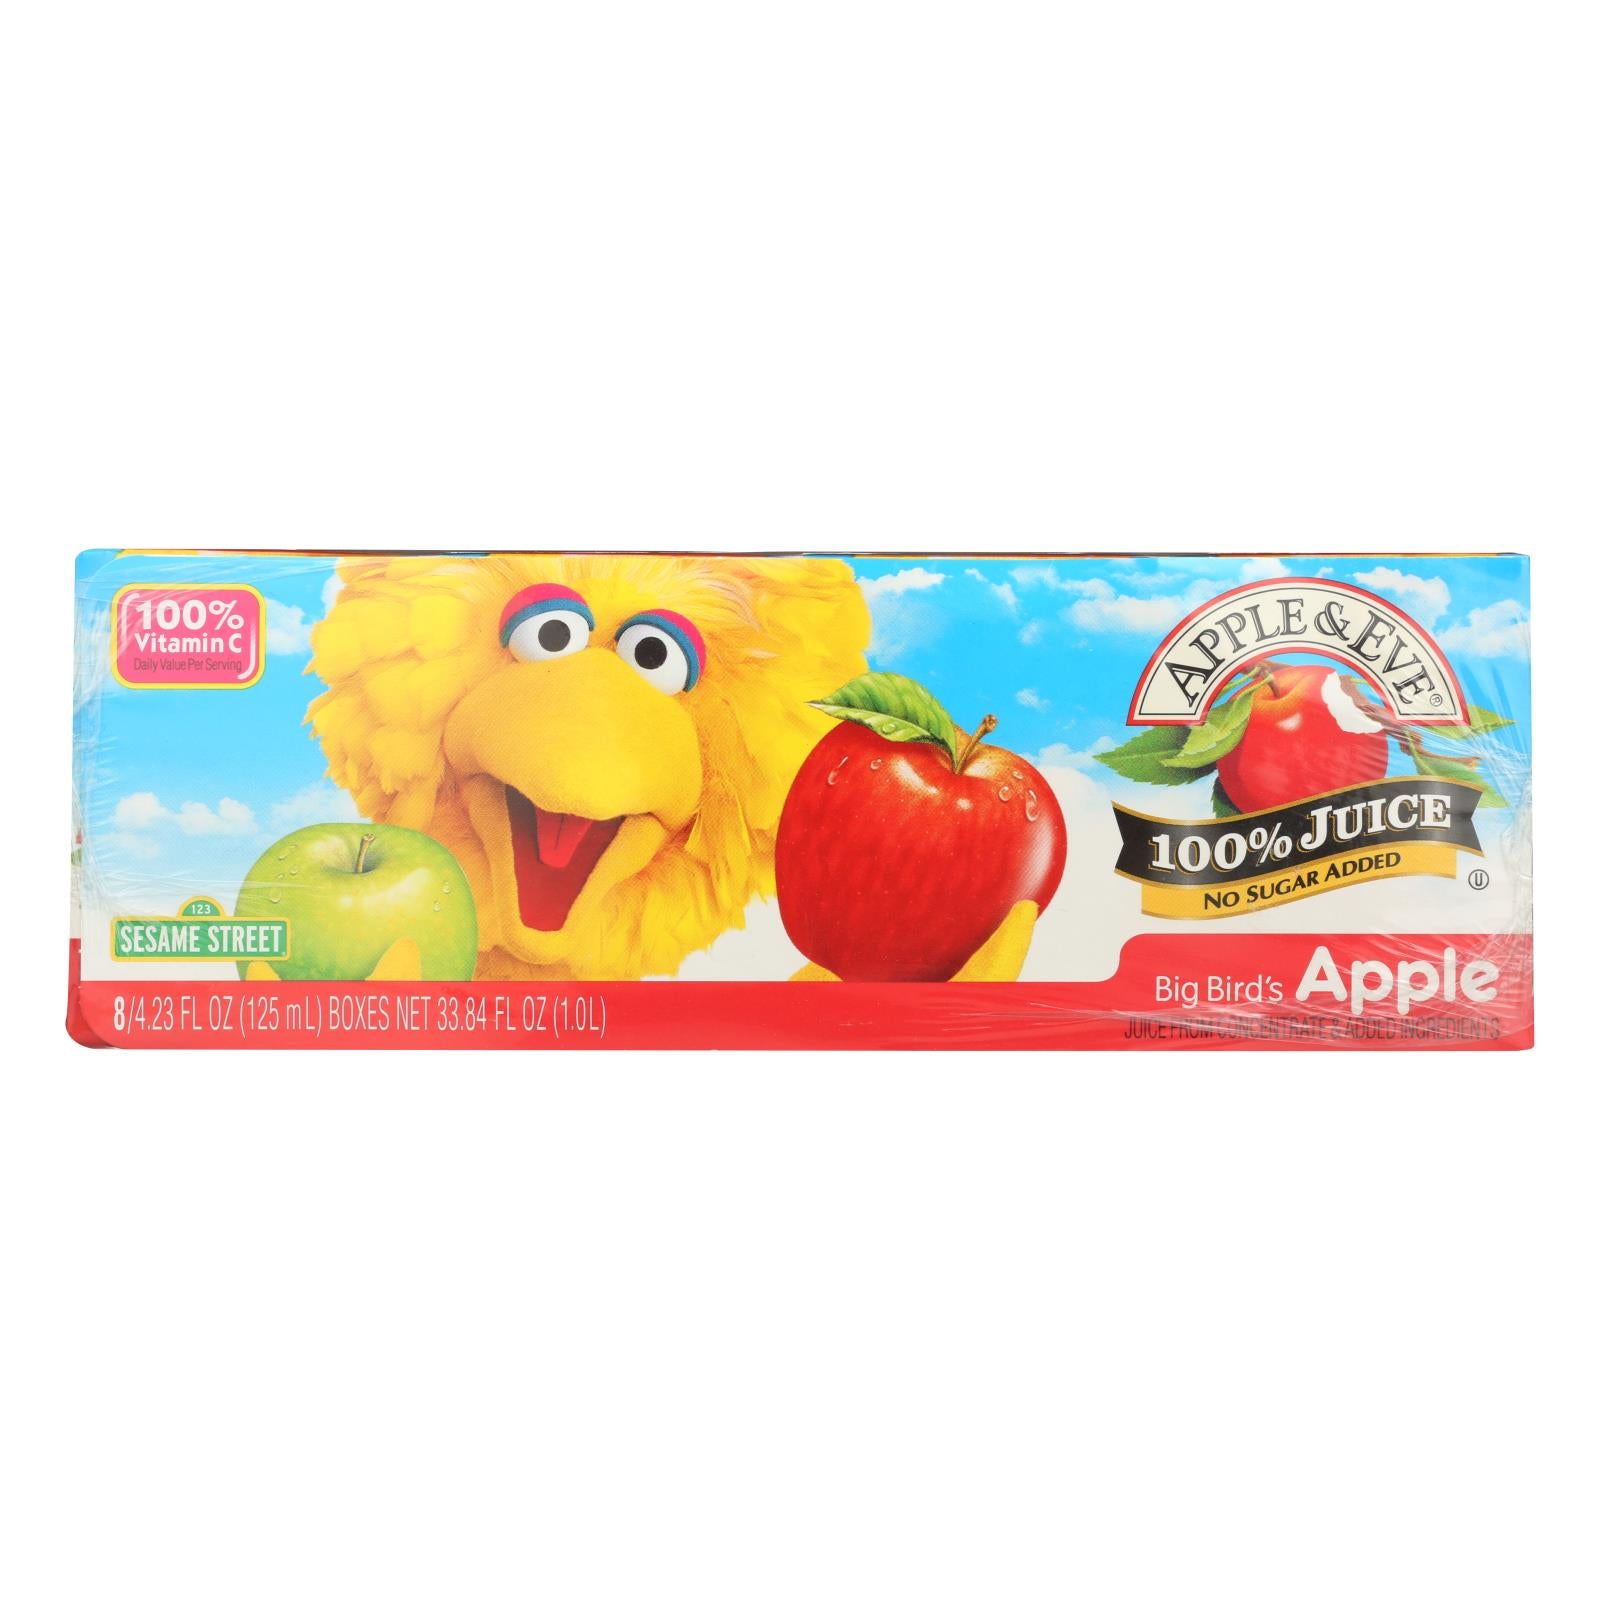 Apple & Eve, Apple and Eve Sesame Street Big Bird's Juice Apple - Case of 6 - 6 Bags (Pack of 5)